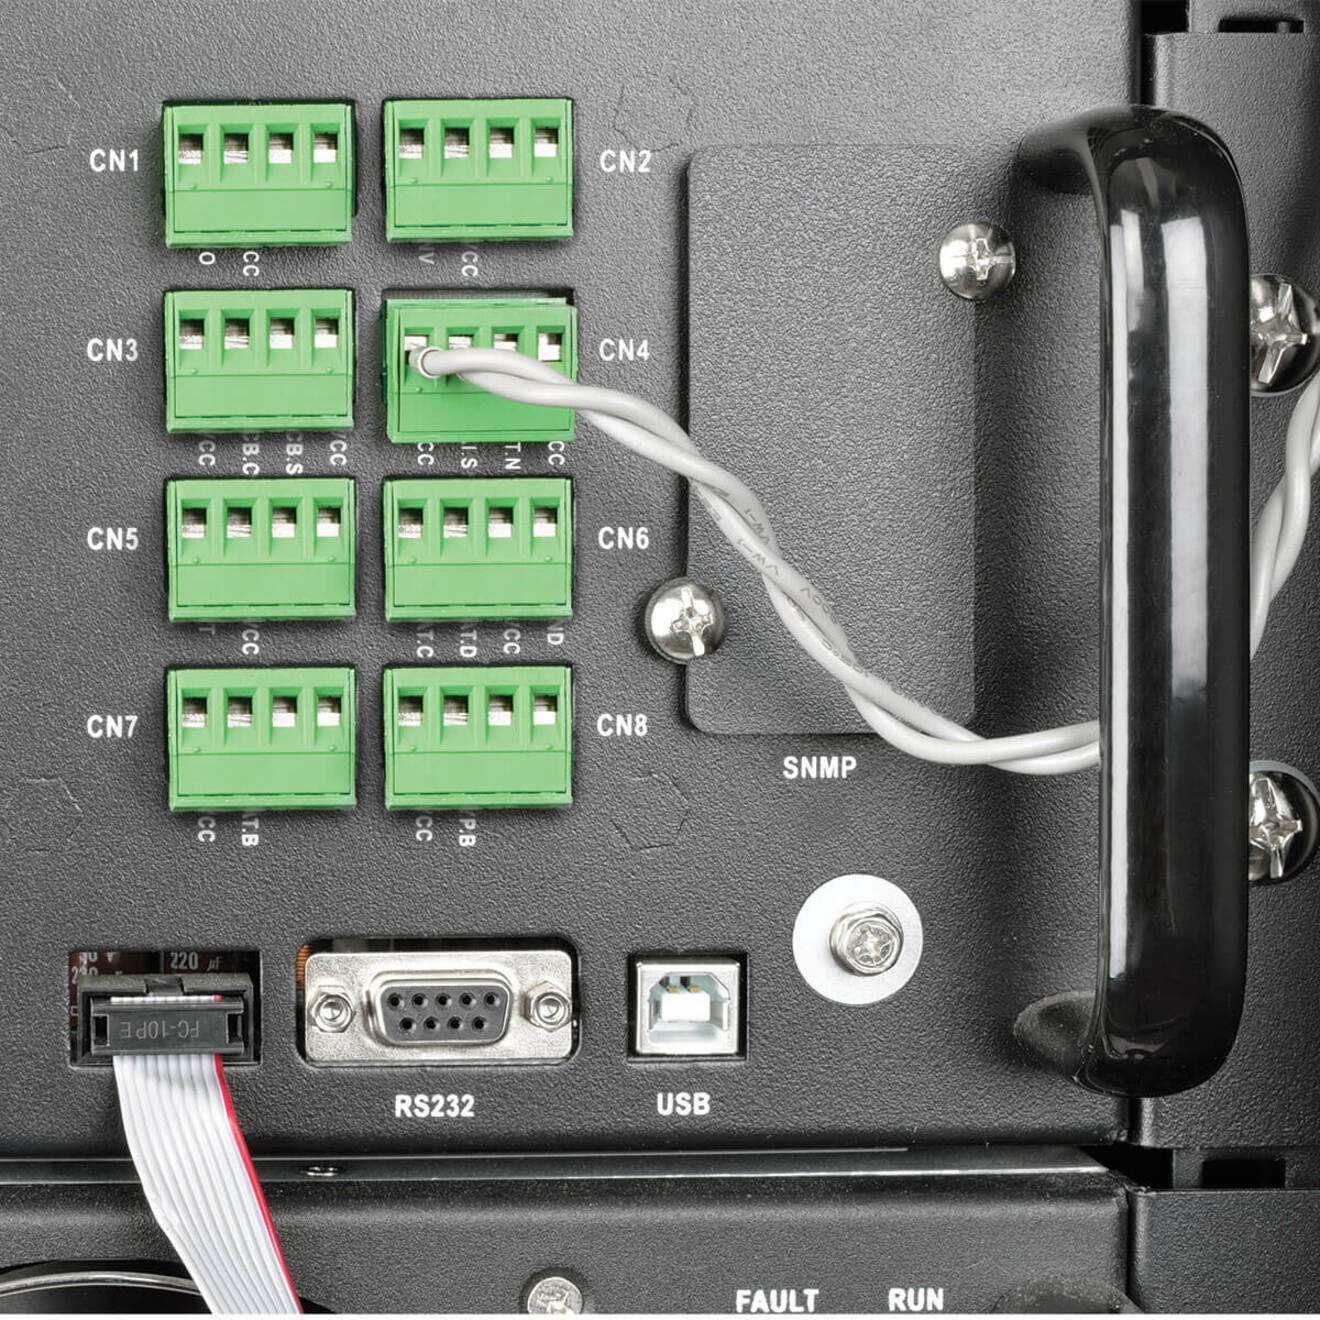 Tripp Lite SmartOnline SVX Series 60kVA 400/230V 50/60Hz Modular Scalable 3-Phase On-Line Double-Conversion Medium-Frame UPS System 3 Battery Modules